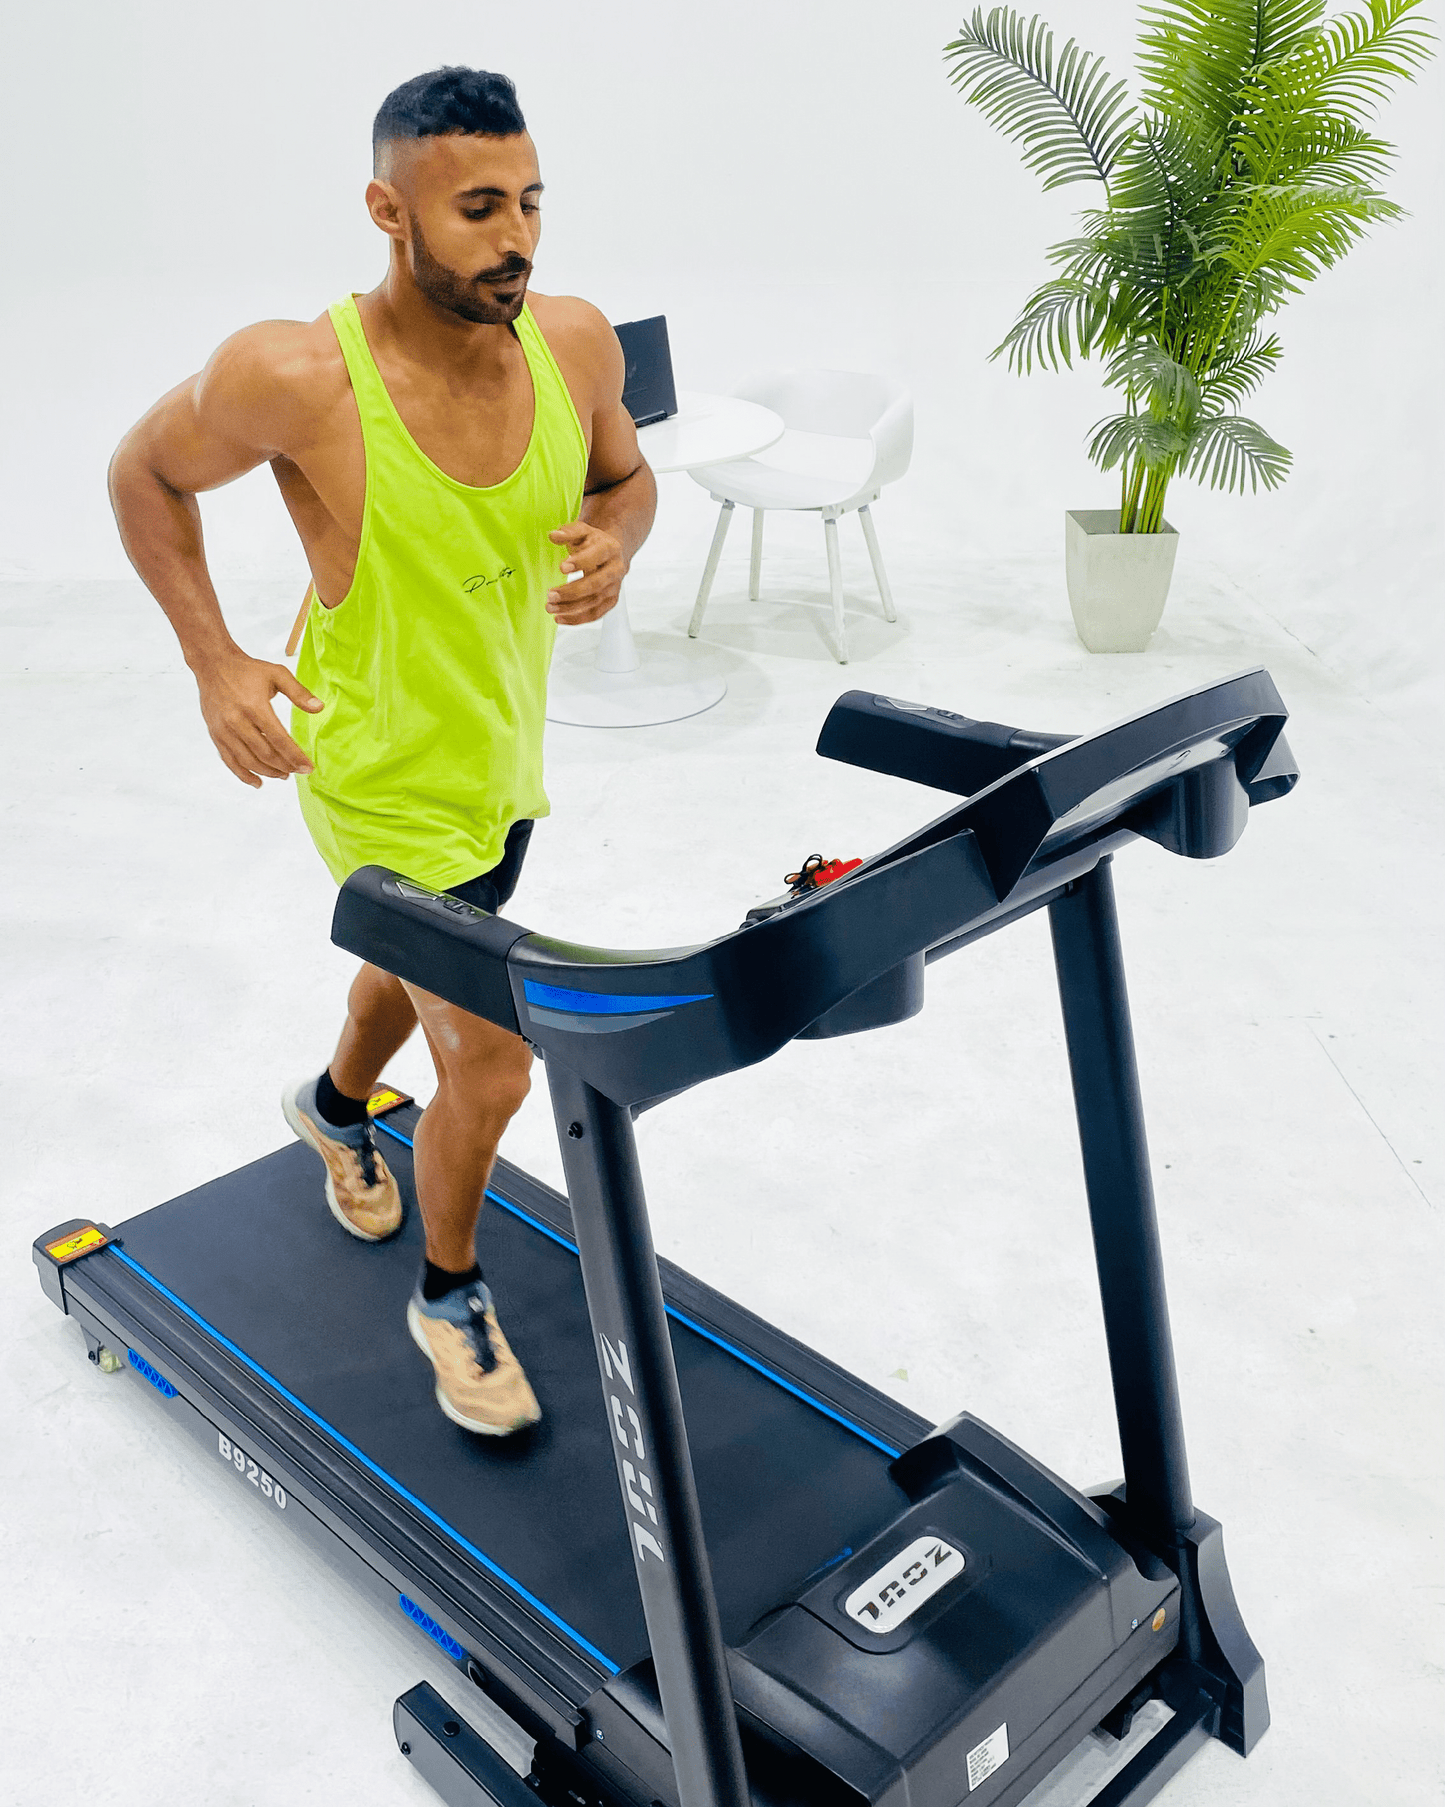 Zoul Fitness B-9250 series(4 HP Peak) Digital Heavy Duty Treadmill for Home Use - zoulfitness